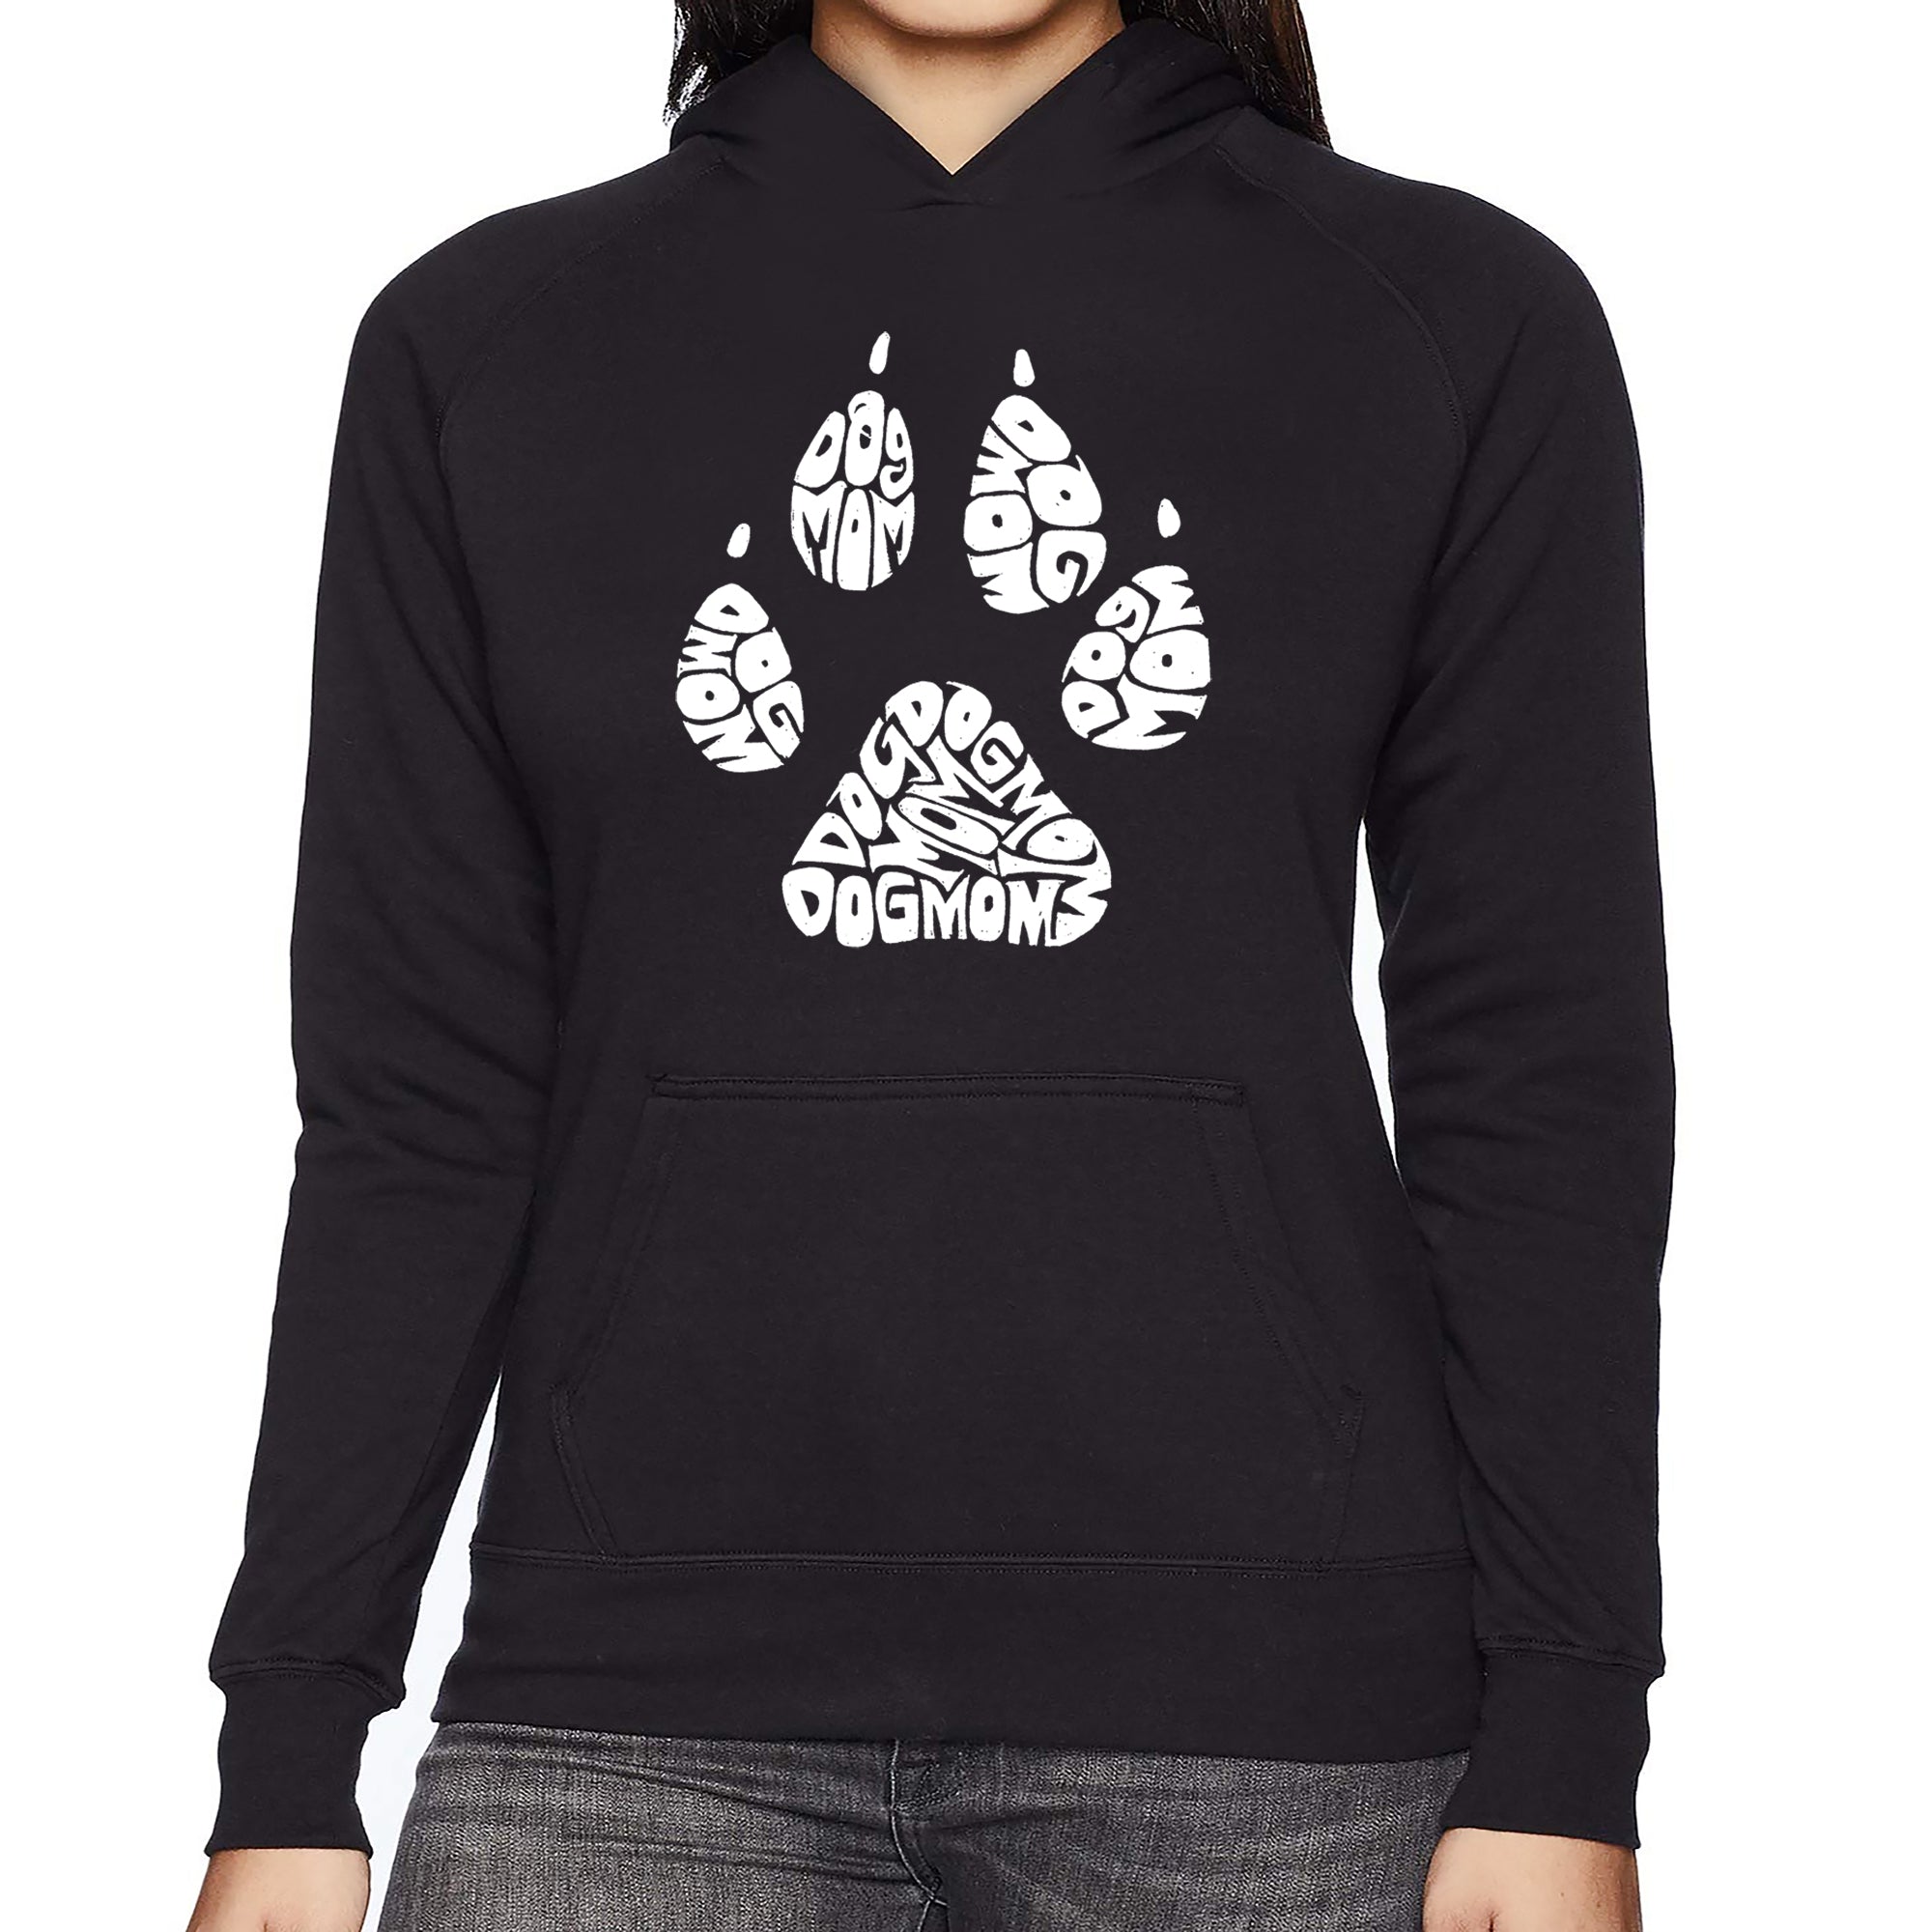 Dog Mom - Women's Word Art Hooded Sweatshirt - Black - XXXX-Large